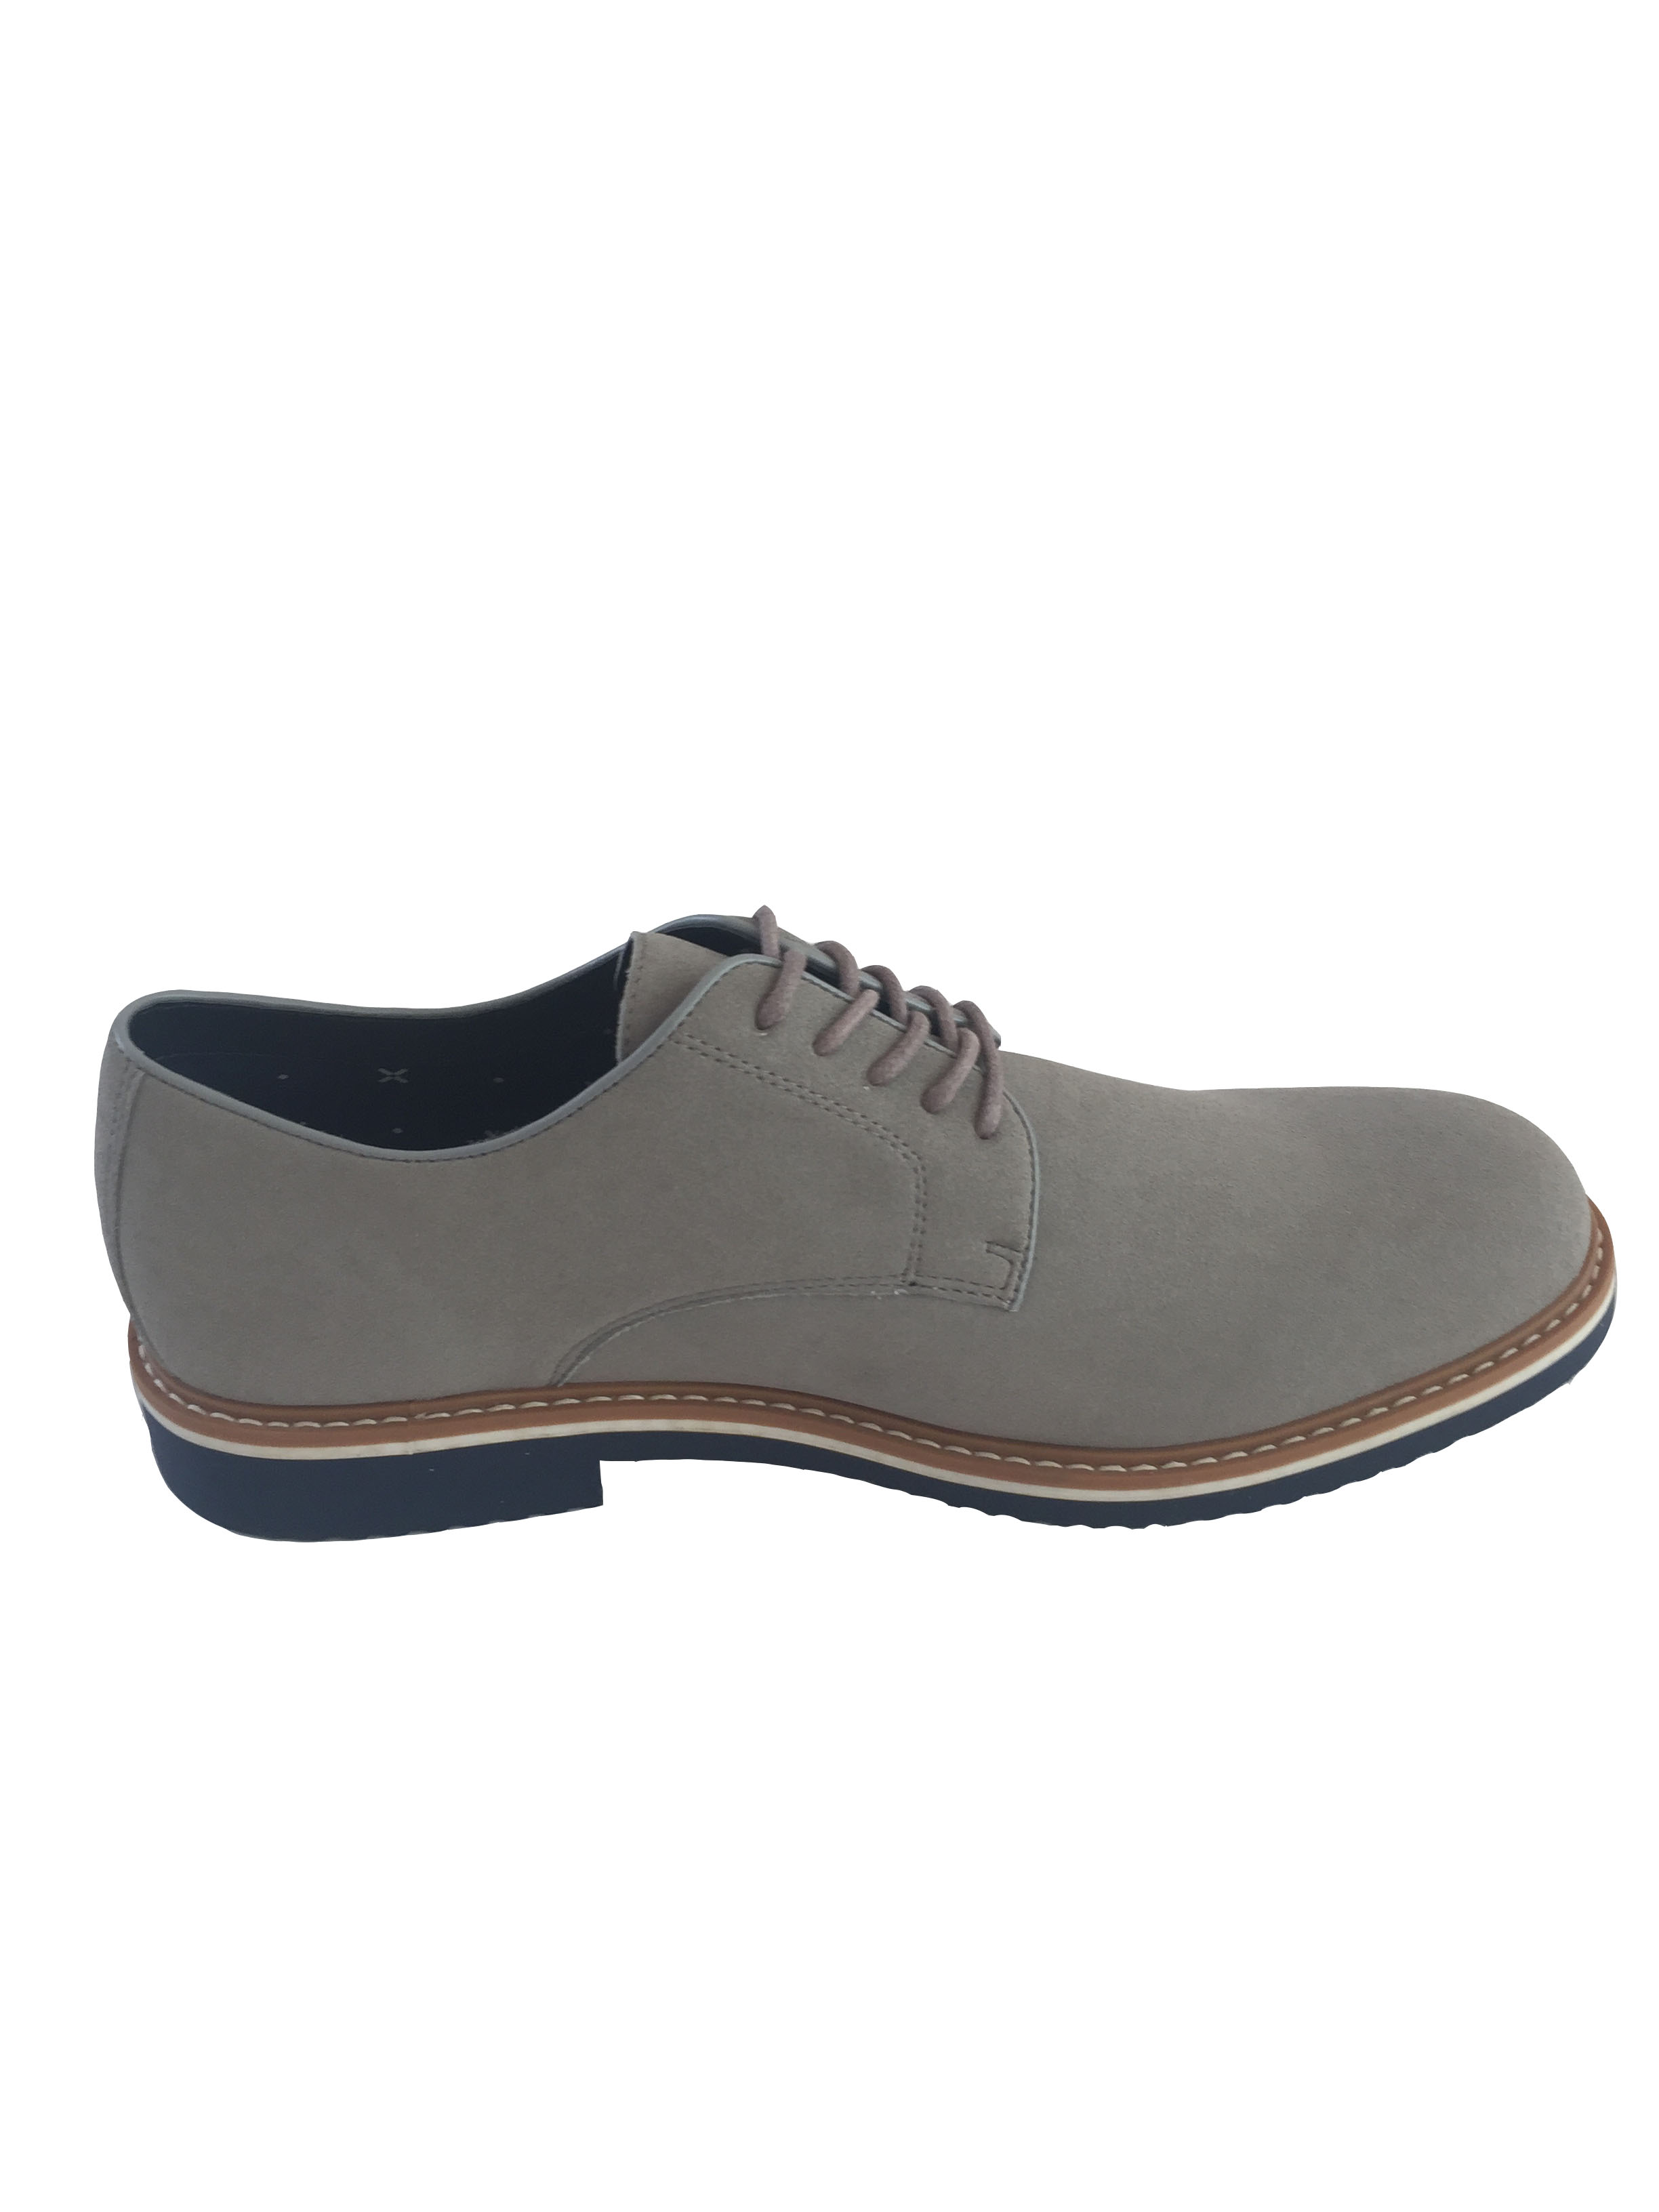 George Men's Plain Toe Casual Oxford Shoe - image 4 of 4